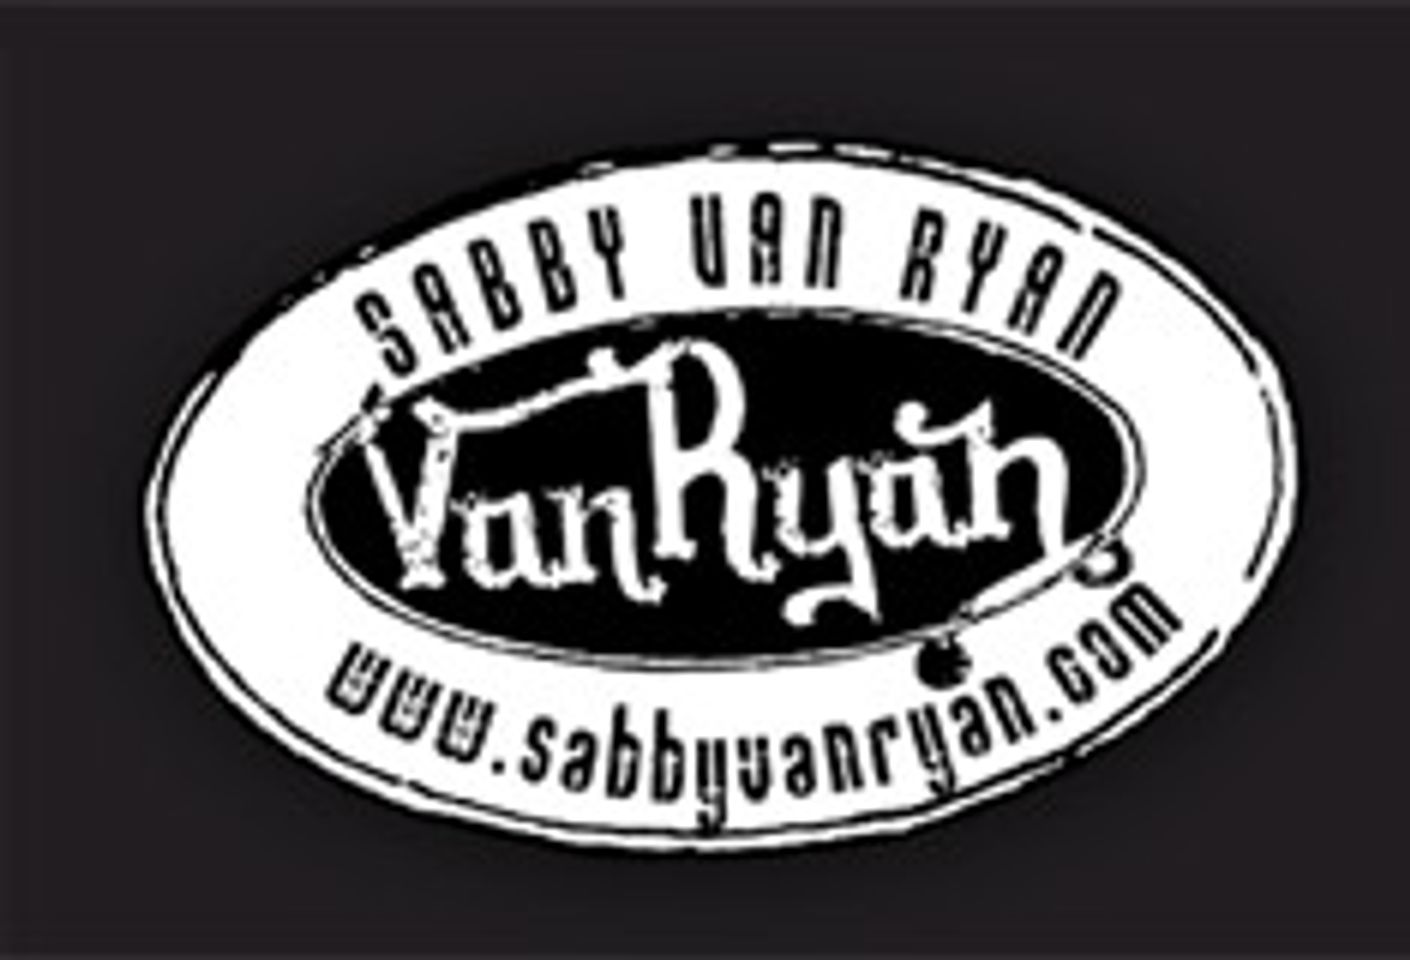 jaYManCash Releases SabbyVanRyan.com